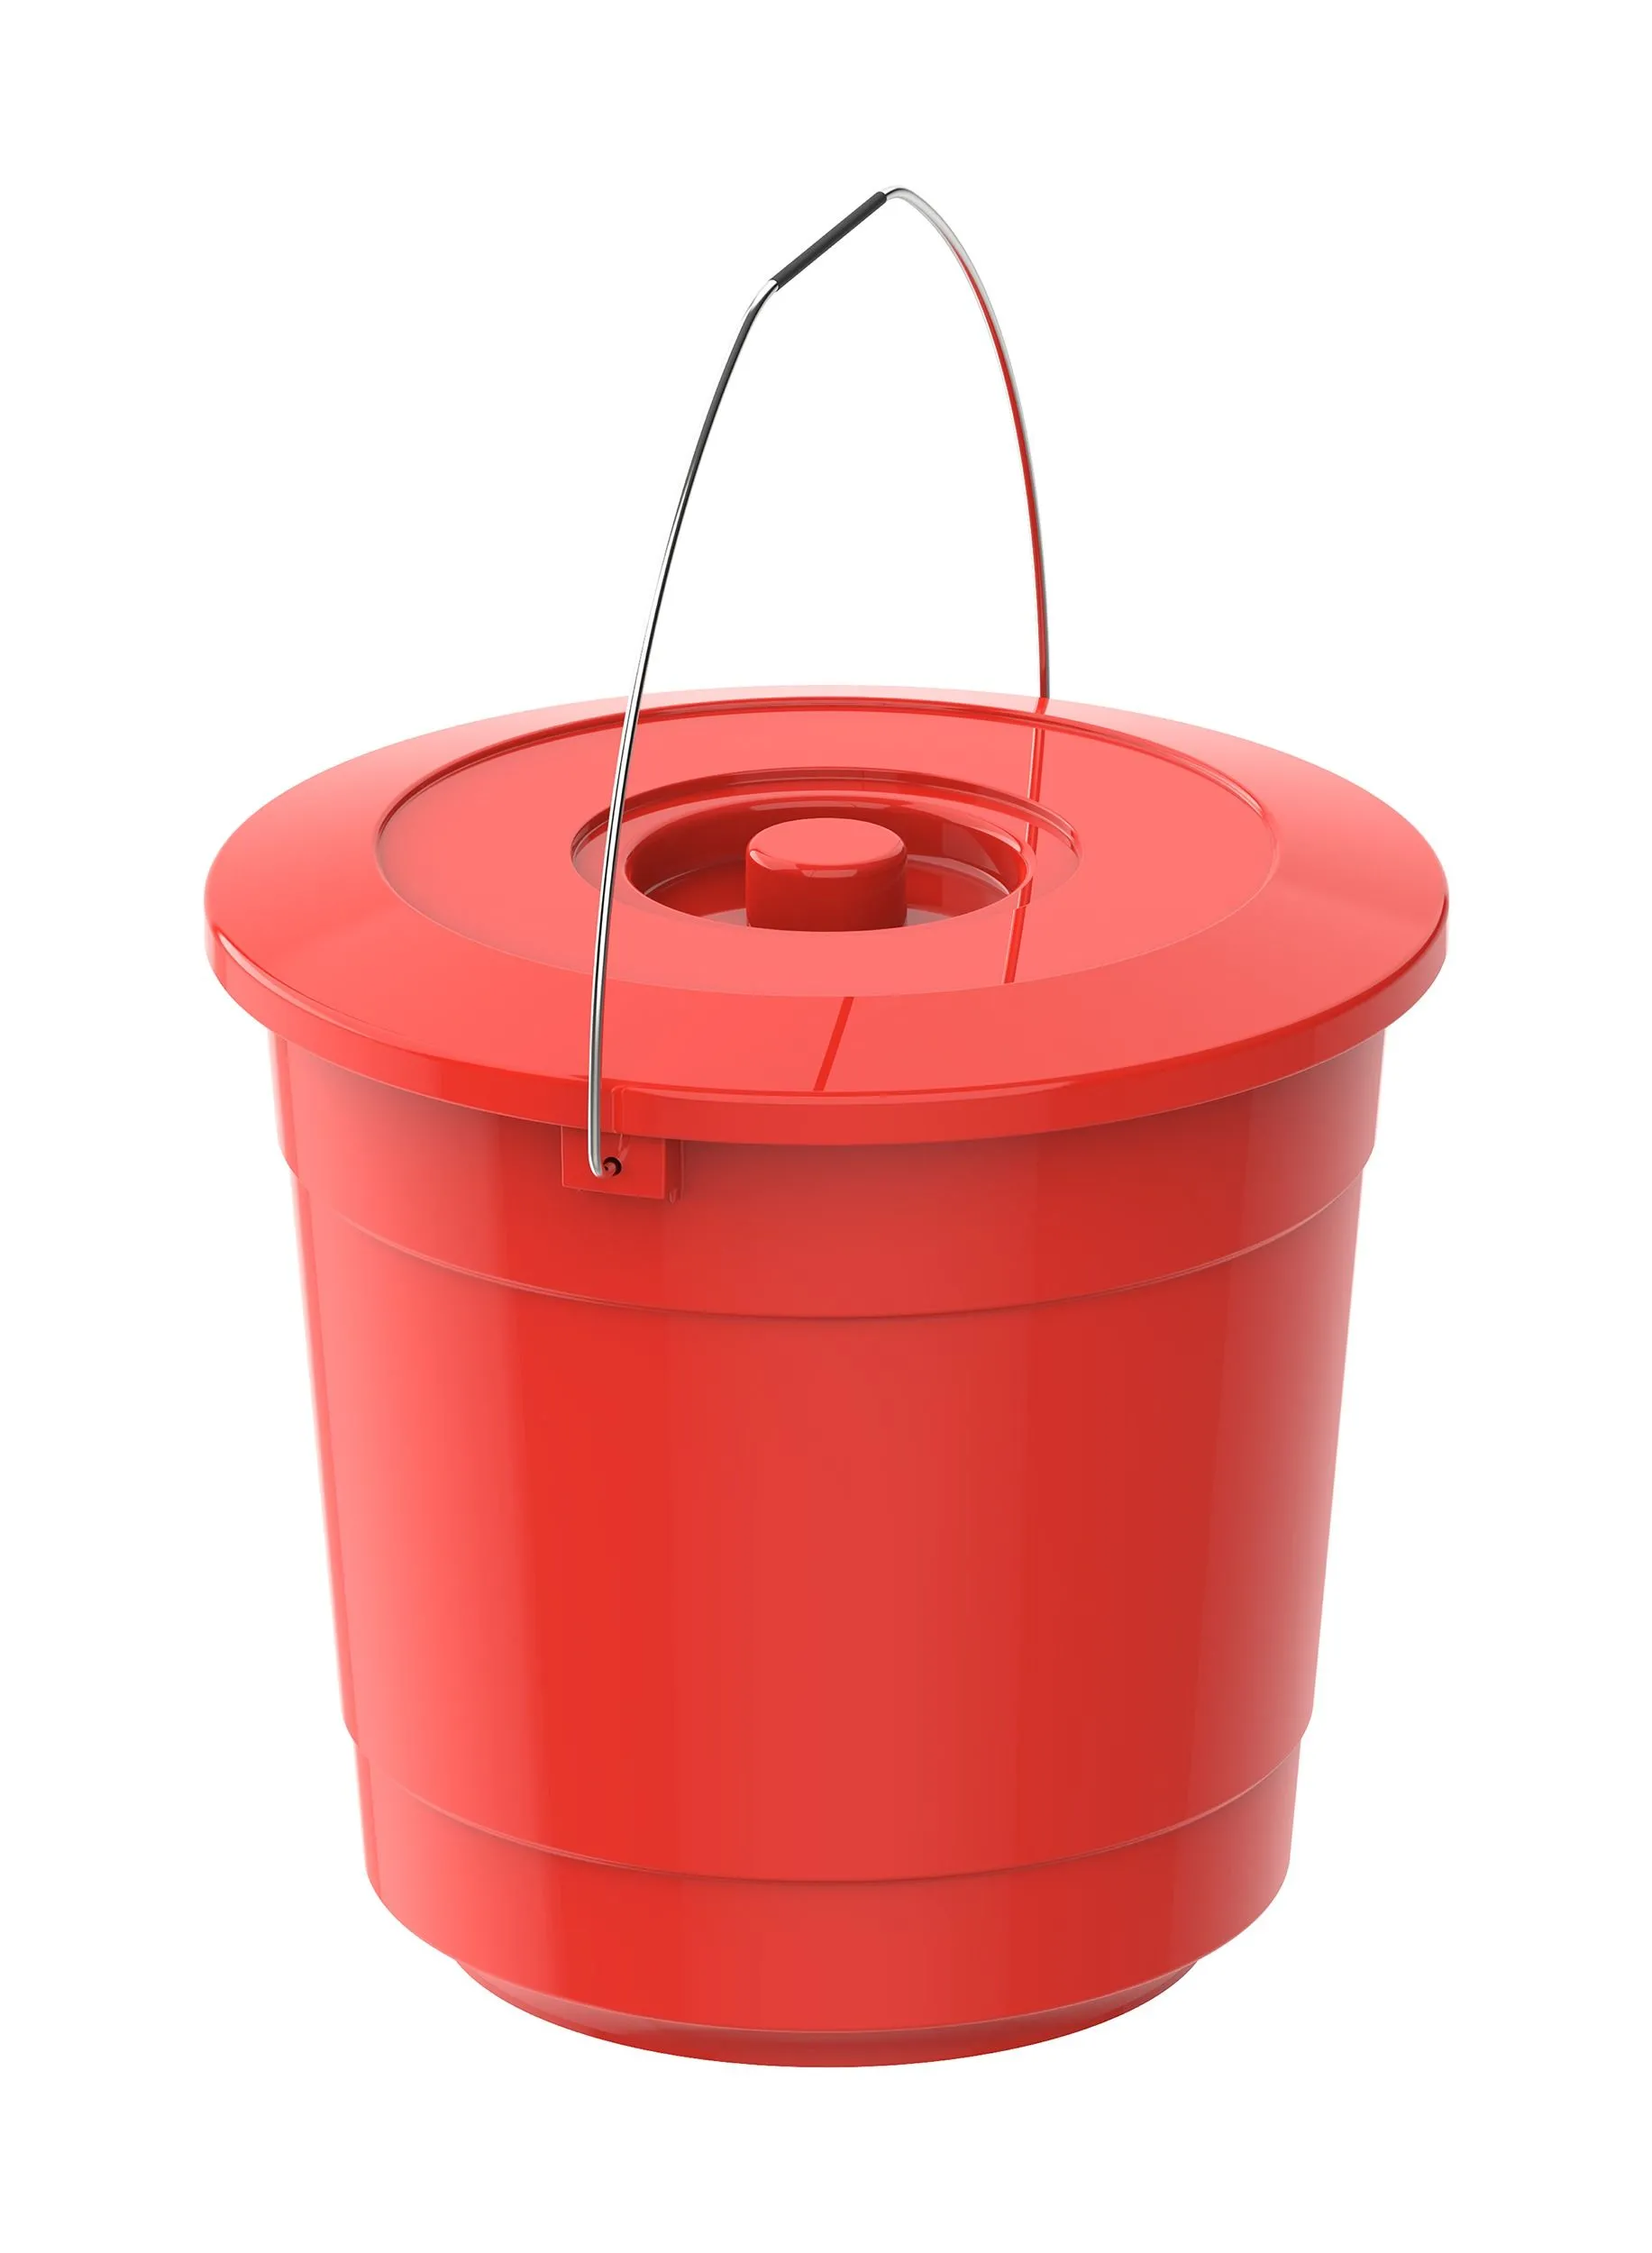 Cosmoplast EX 15L Round Plastic Bucket with Steel Handle